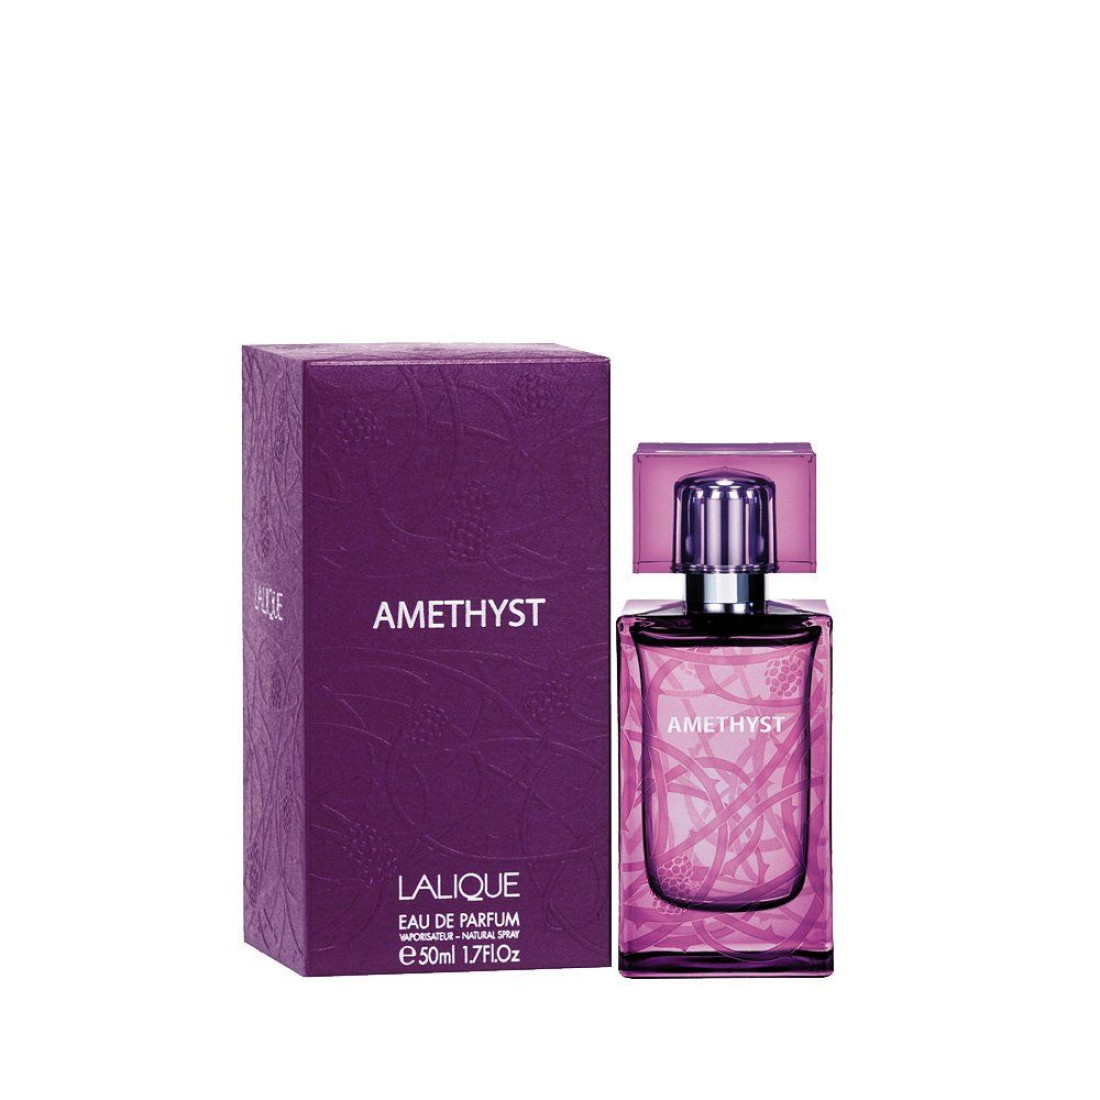 Вода аметист. Lalique Amethyst 50 мл. Lalique Amethyst EDP (50 мл). Lalique Amethyst (l) 50ml EDP. Lalique Amethyst Eau de Parfum for women 100 ml..